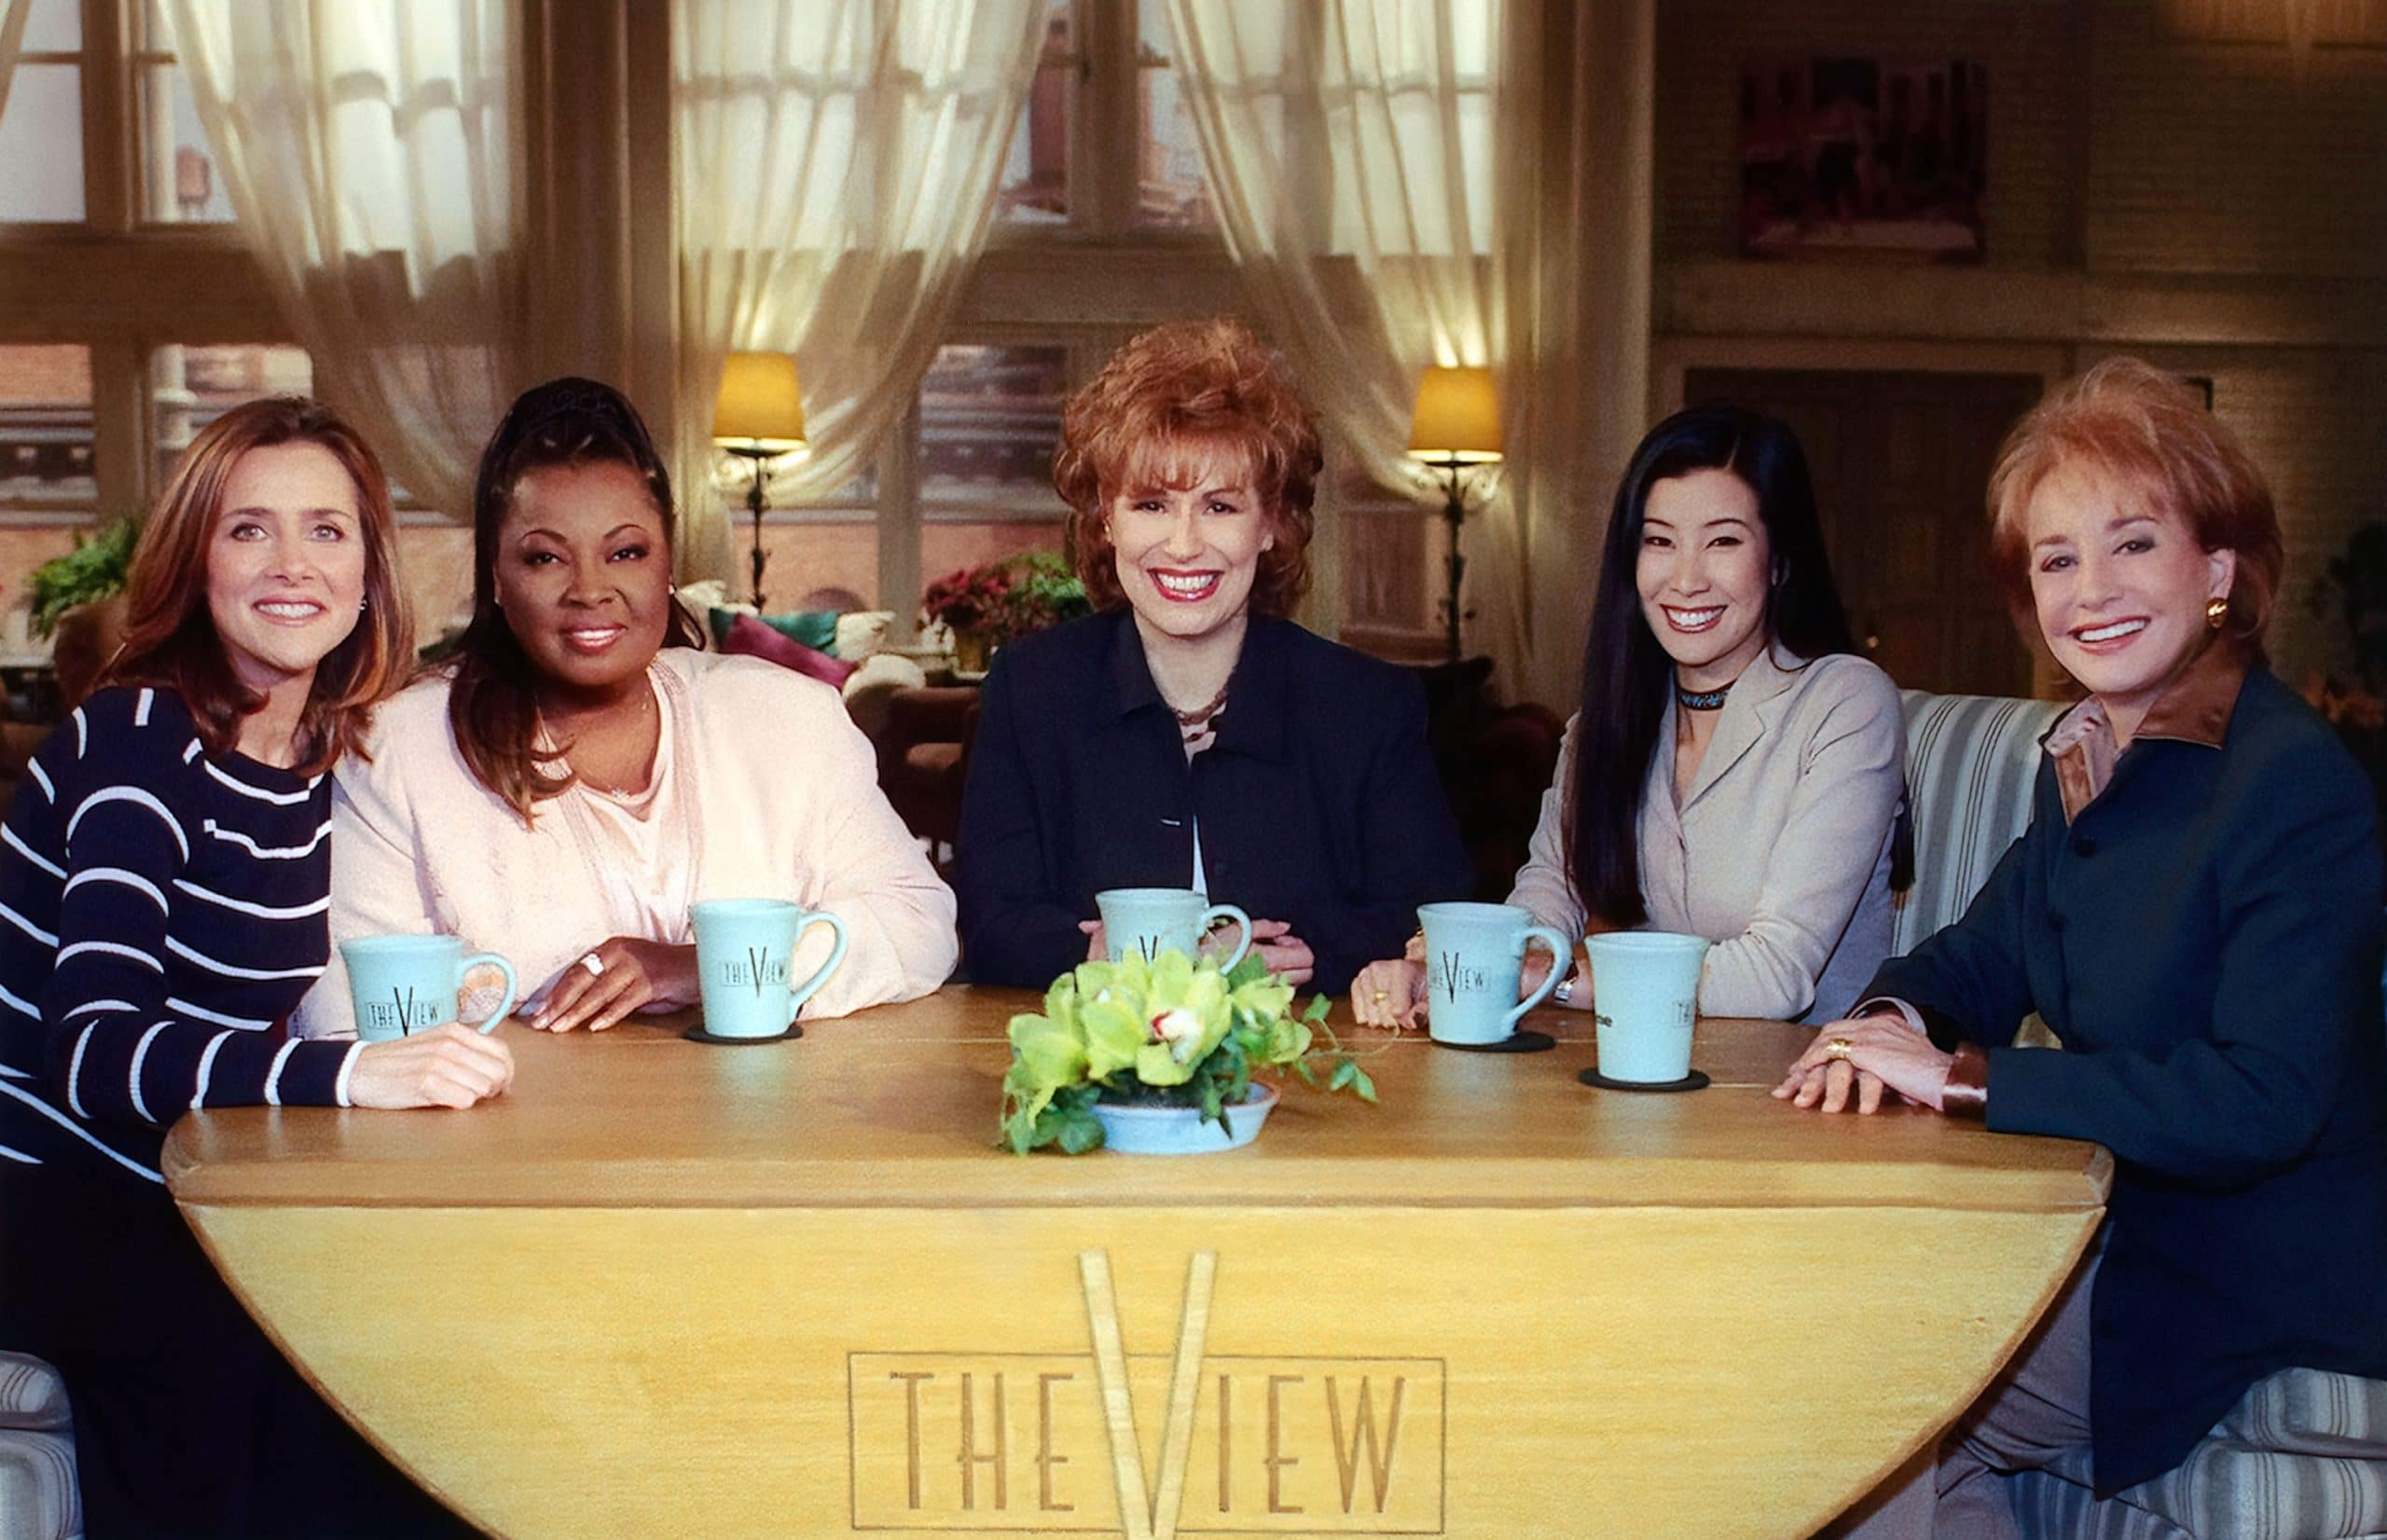 THE VIEW, from left: Meredith Vieira, Star Jones, Joy Behar, Lisa Ling, Barbara Walters